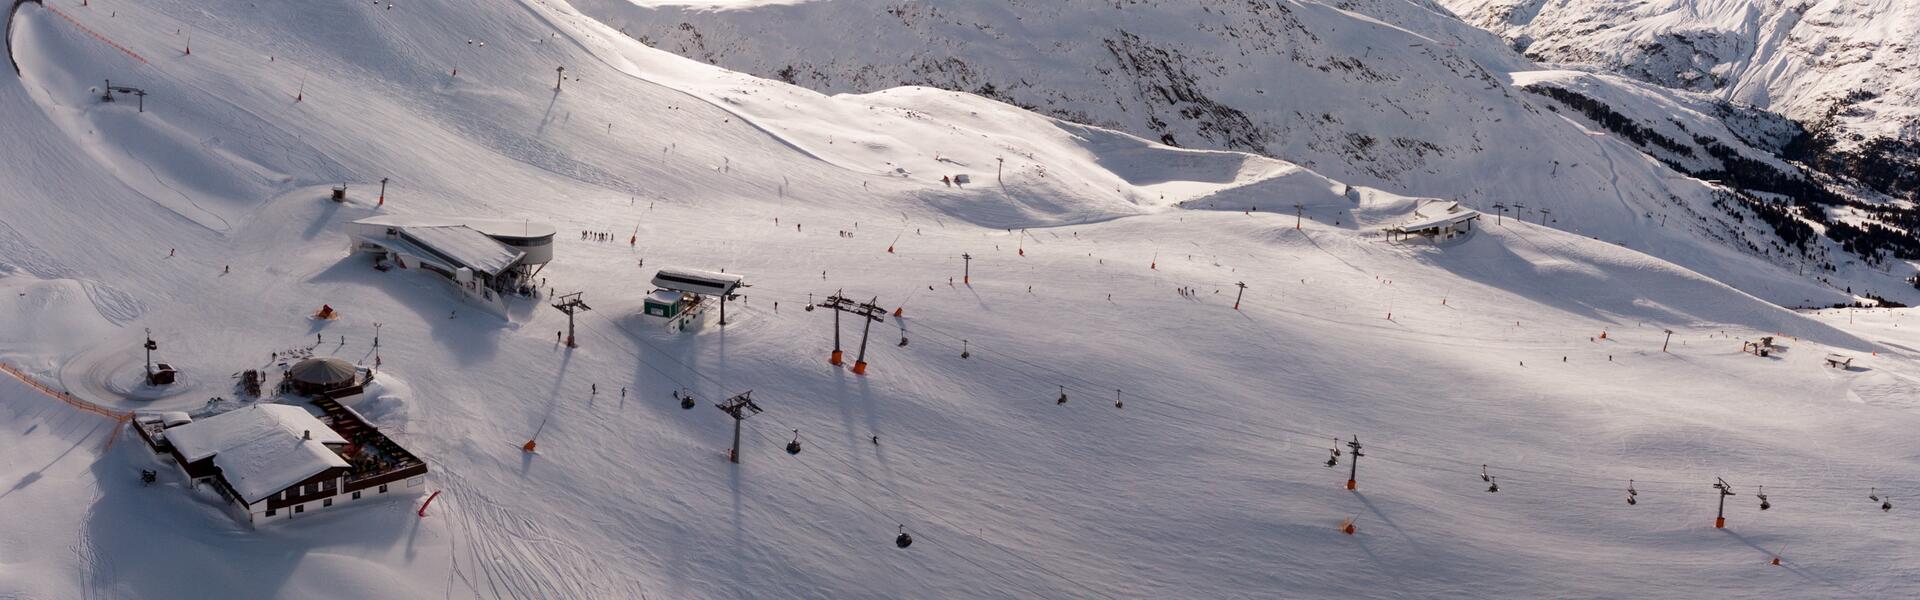 Ski area Obergurgl awards | © Scheiber Sport